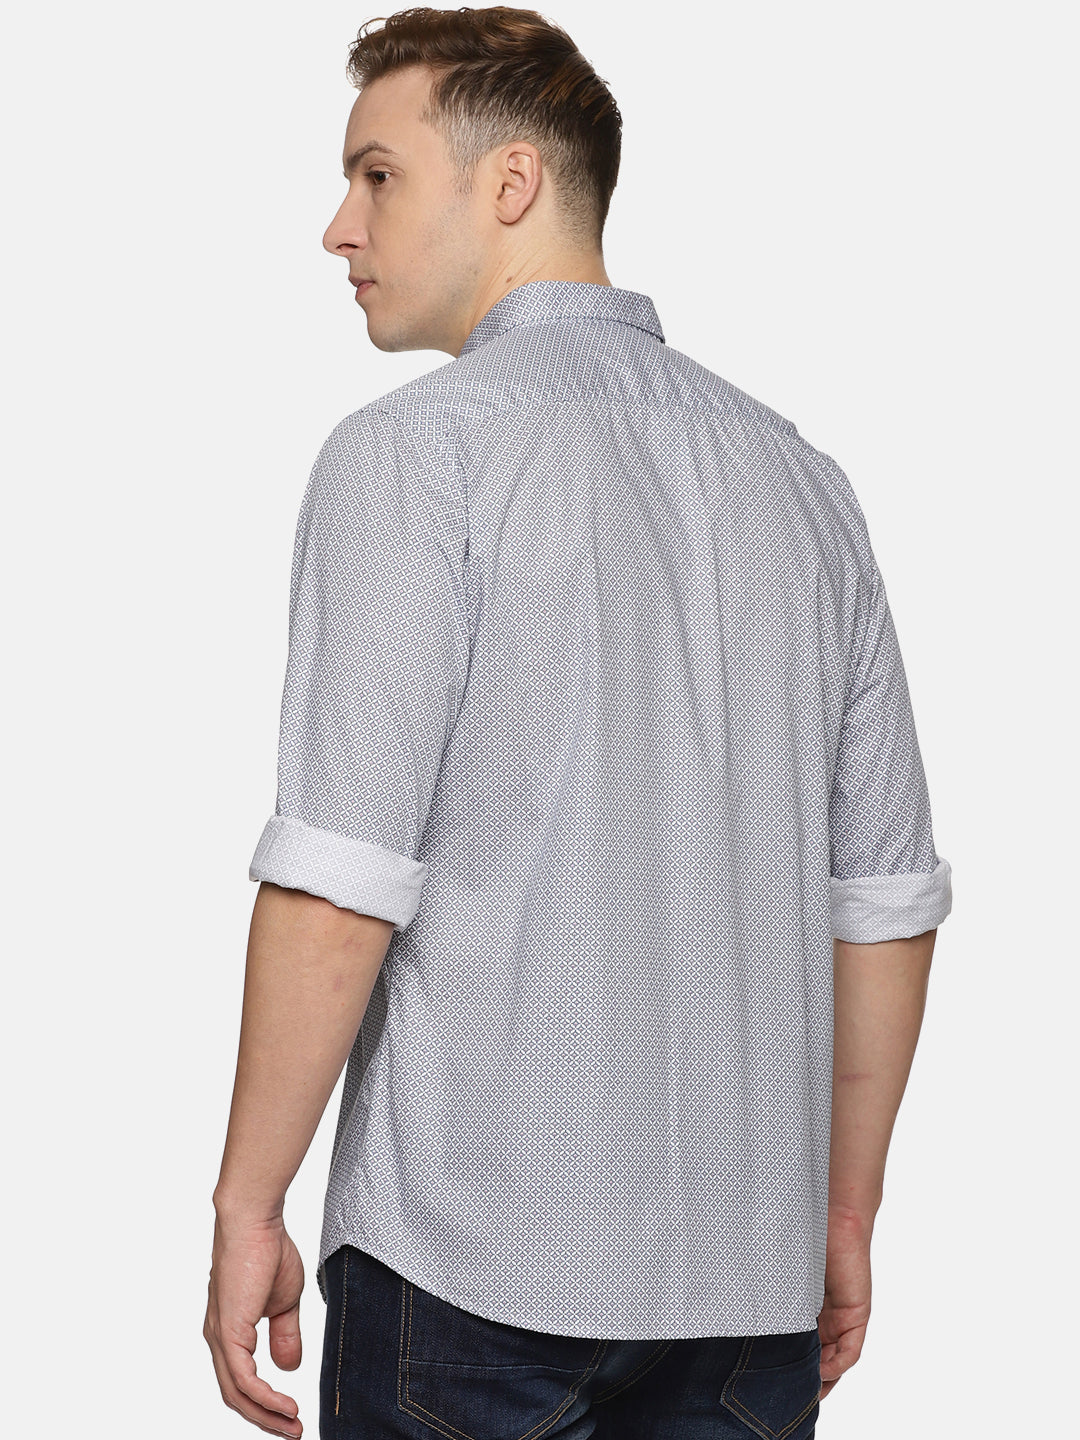 Men Grey Printed Slim Fit Casual Shirt, Men's Full Sleeve Cotton Shirt